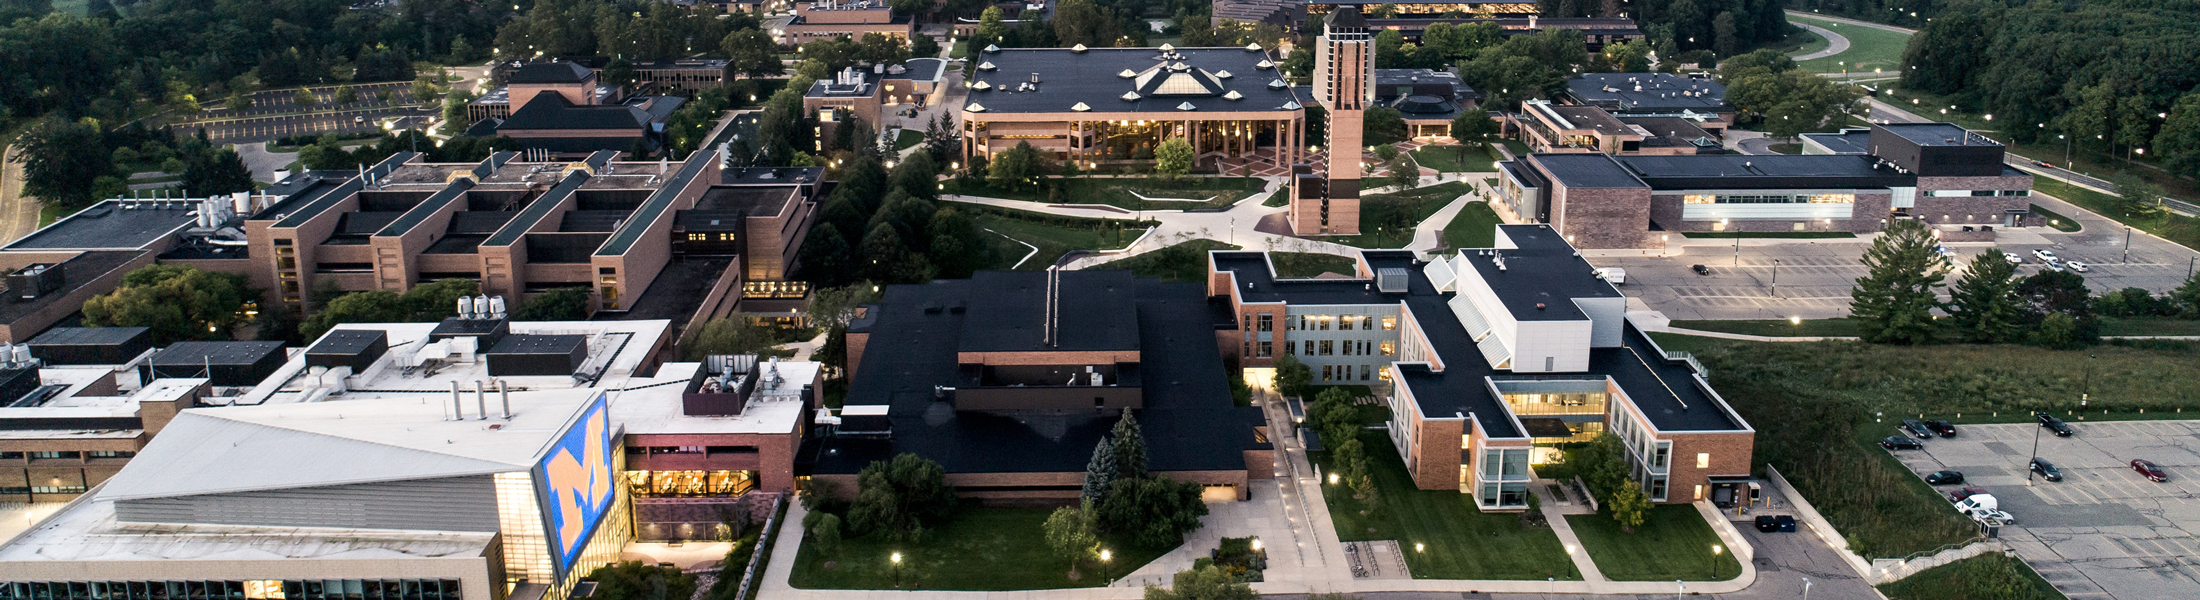 University of Michigan's north campus photo